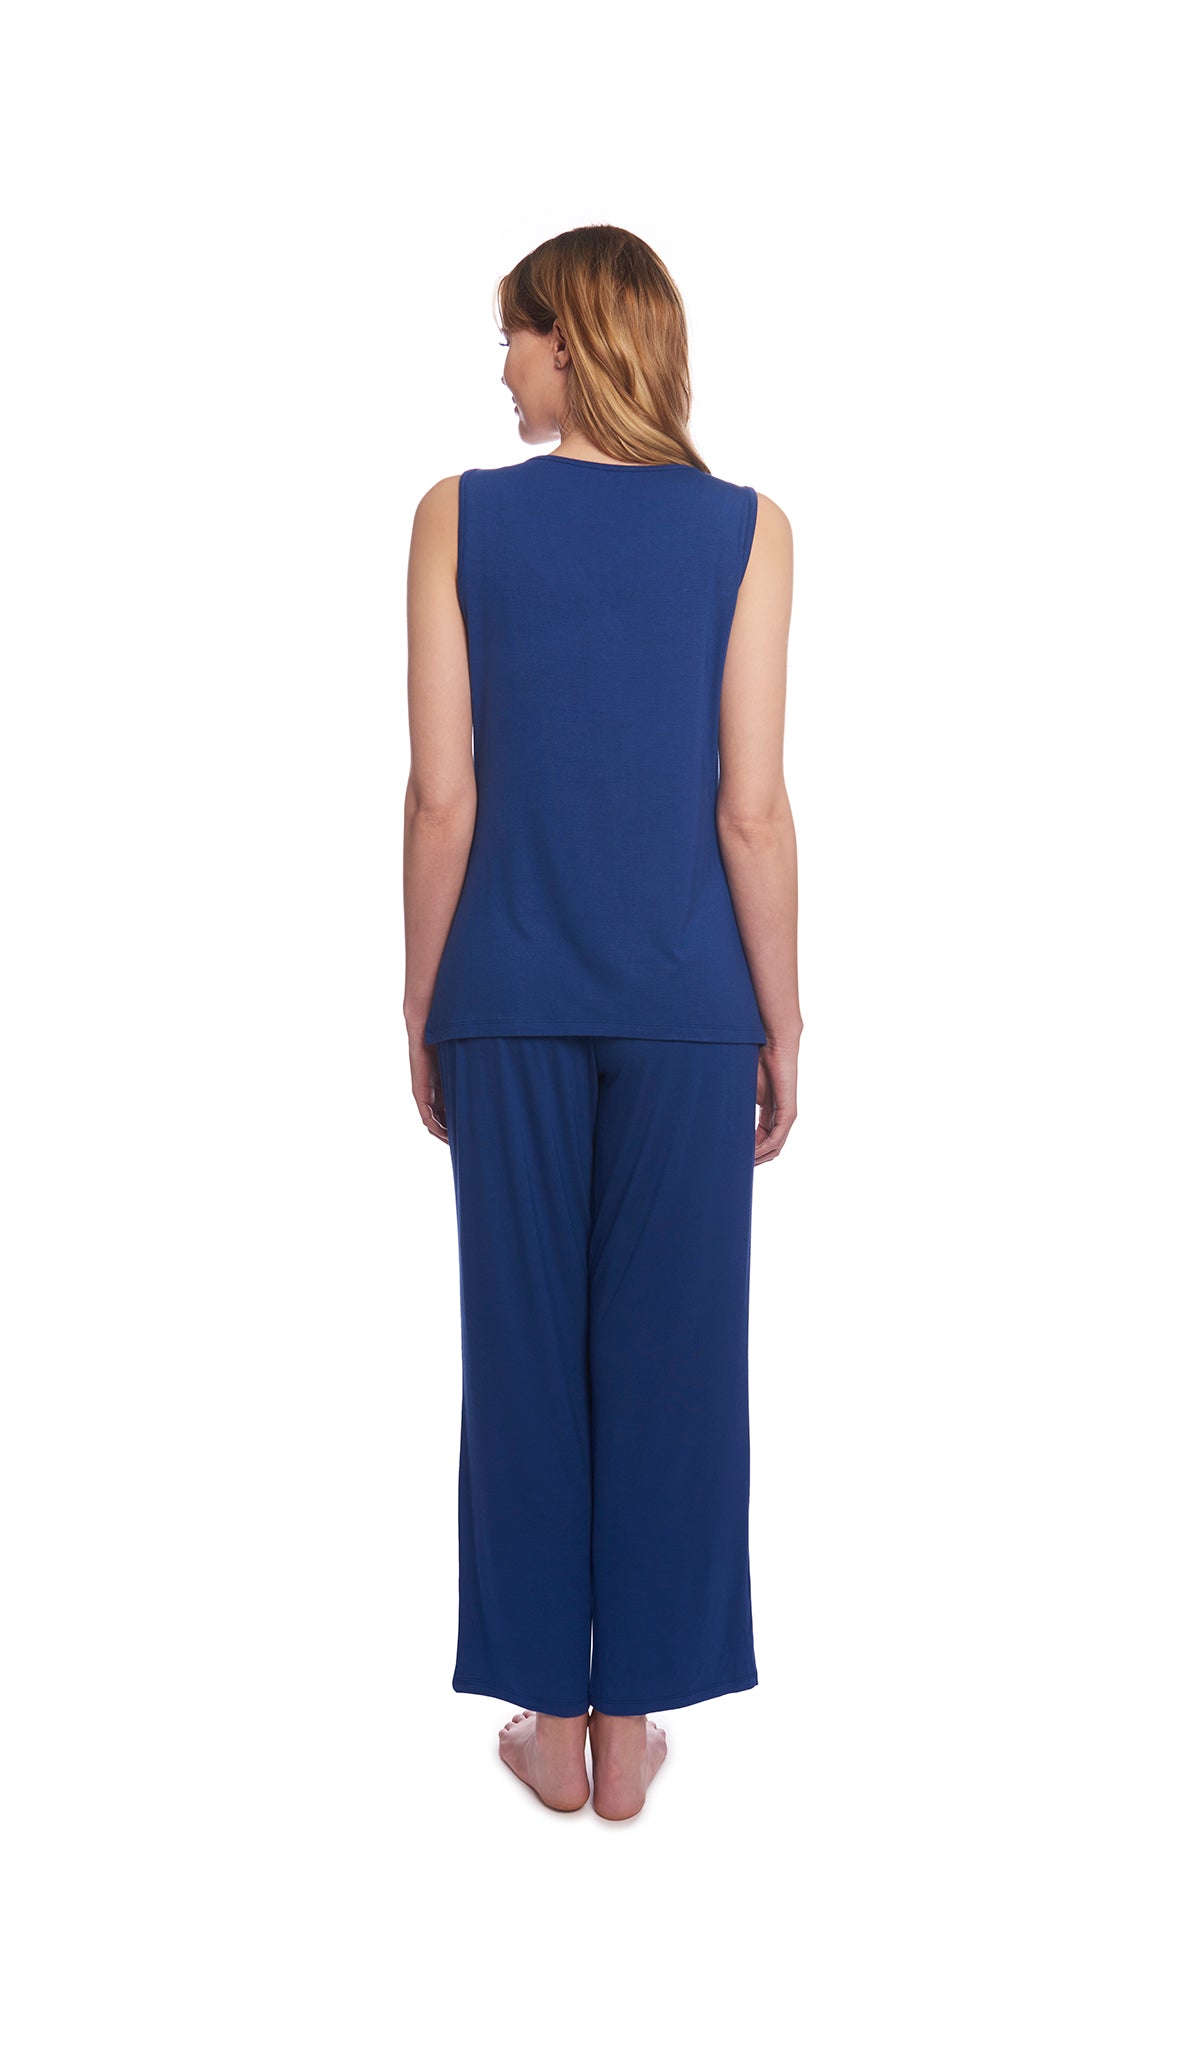 Denim Blue Analise 3-Piece Set, back shot of woman wearing tank top and pant.